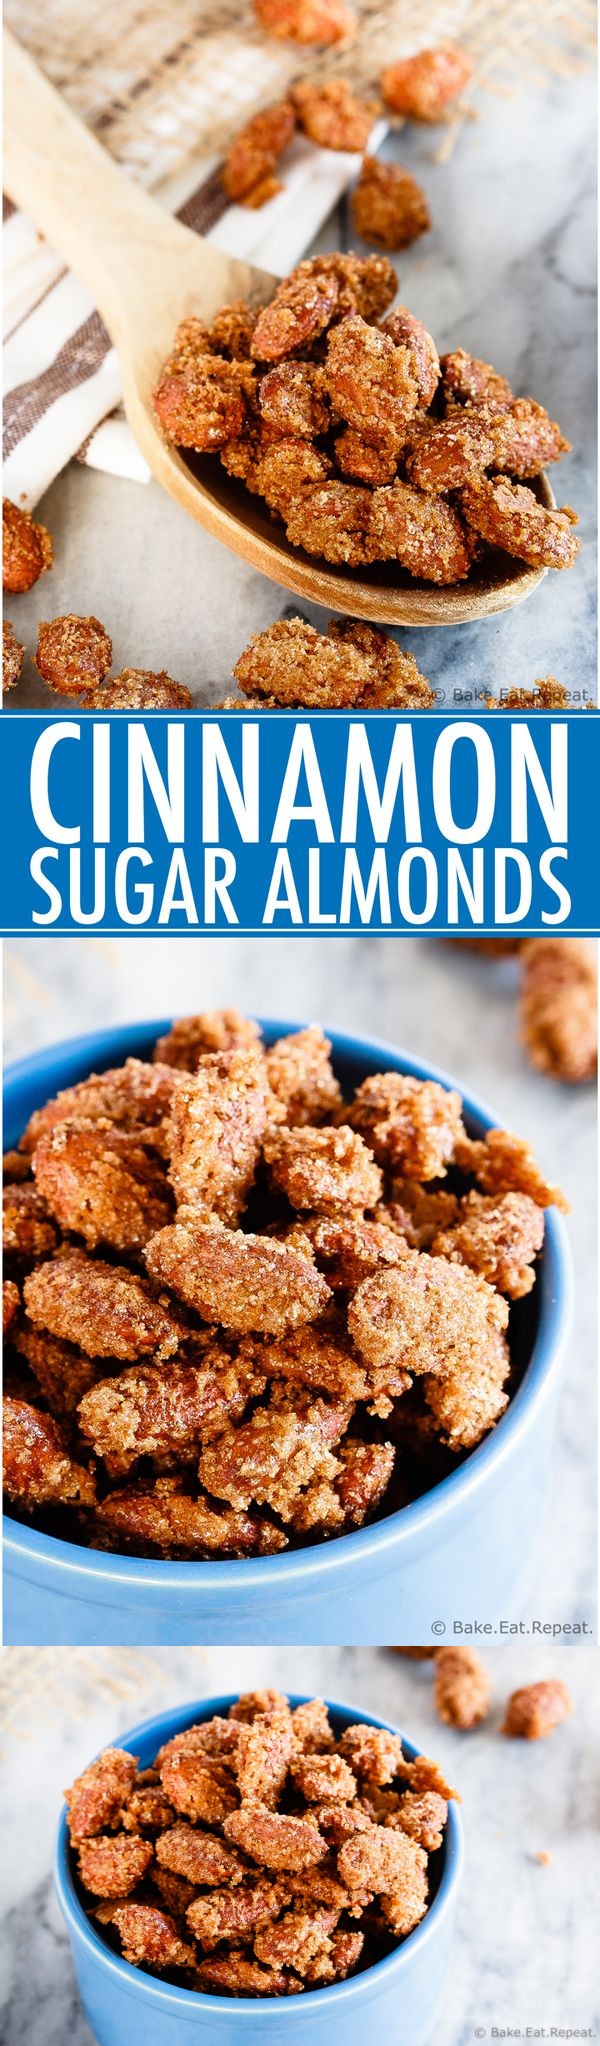 Cinnamon Sugar Almonds